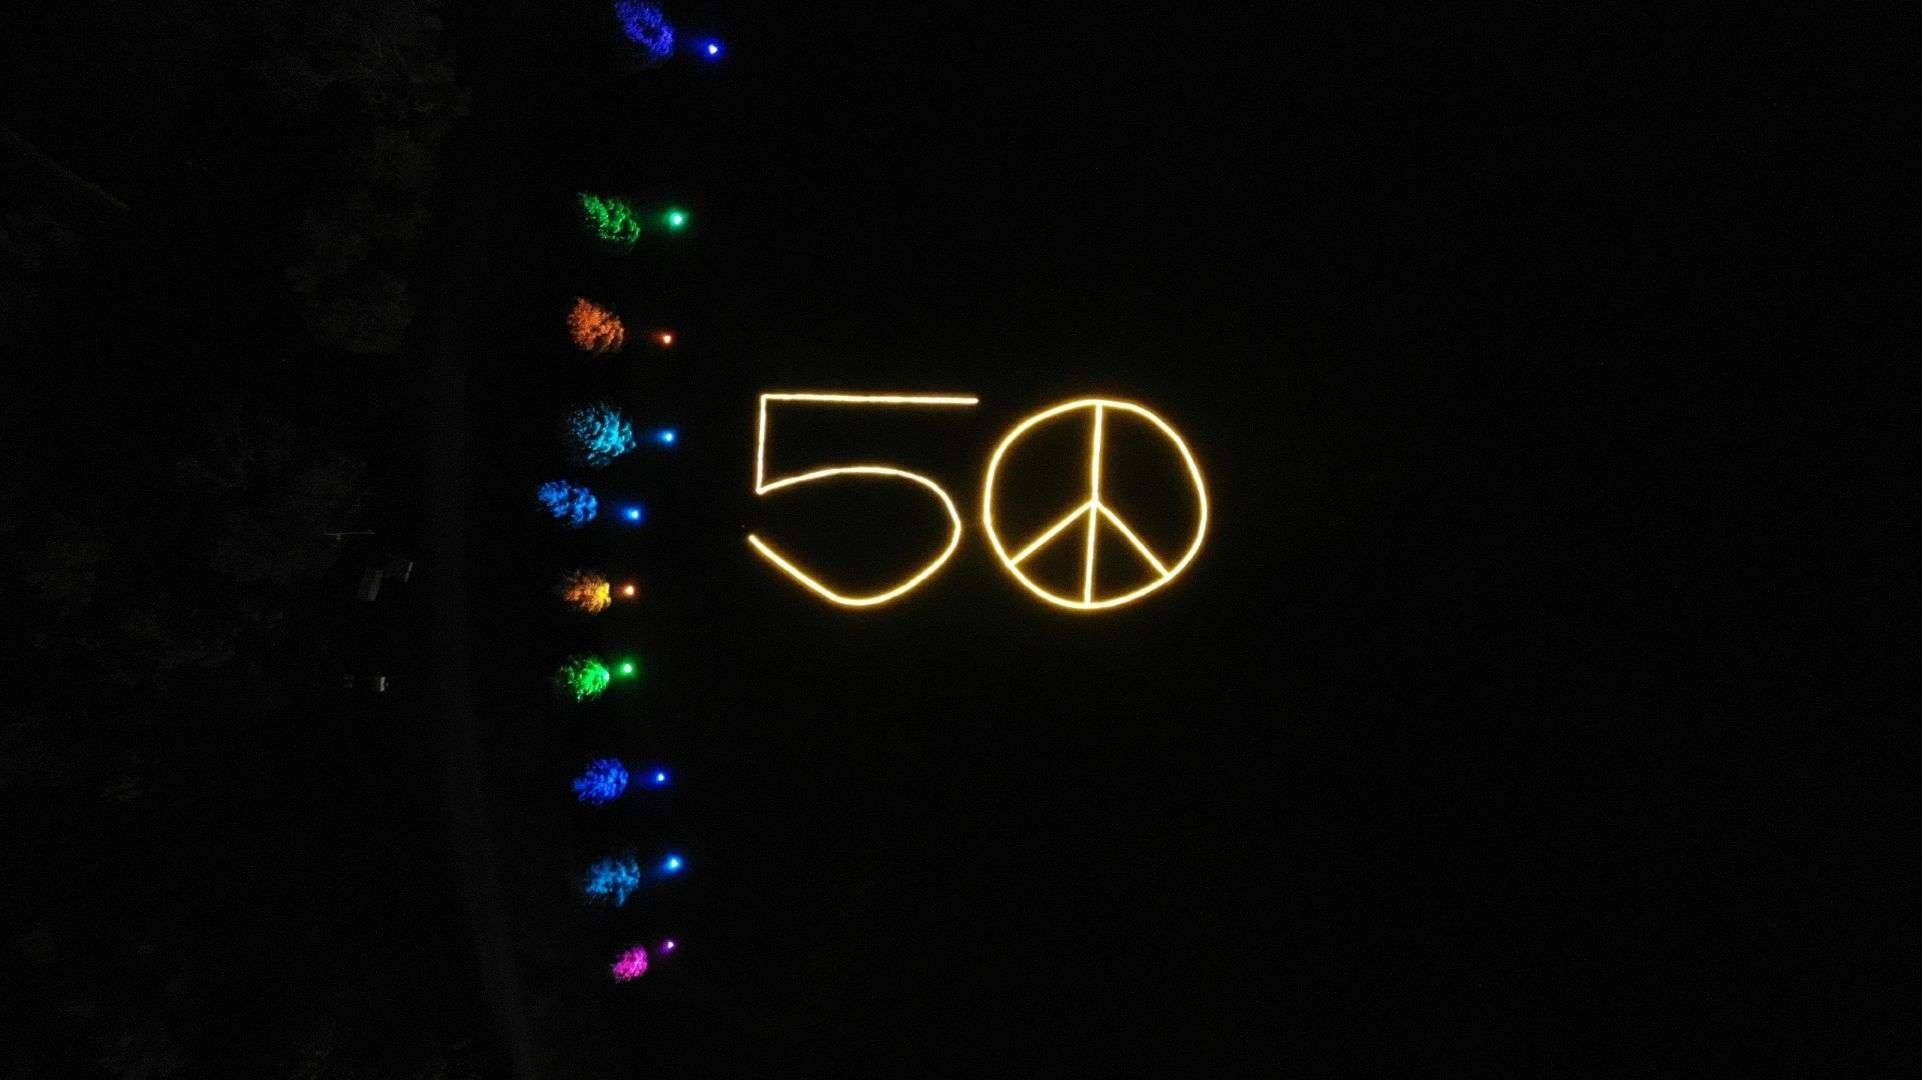 Woodstock 50th